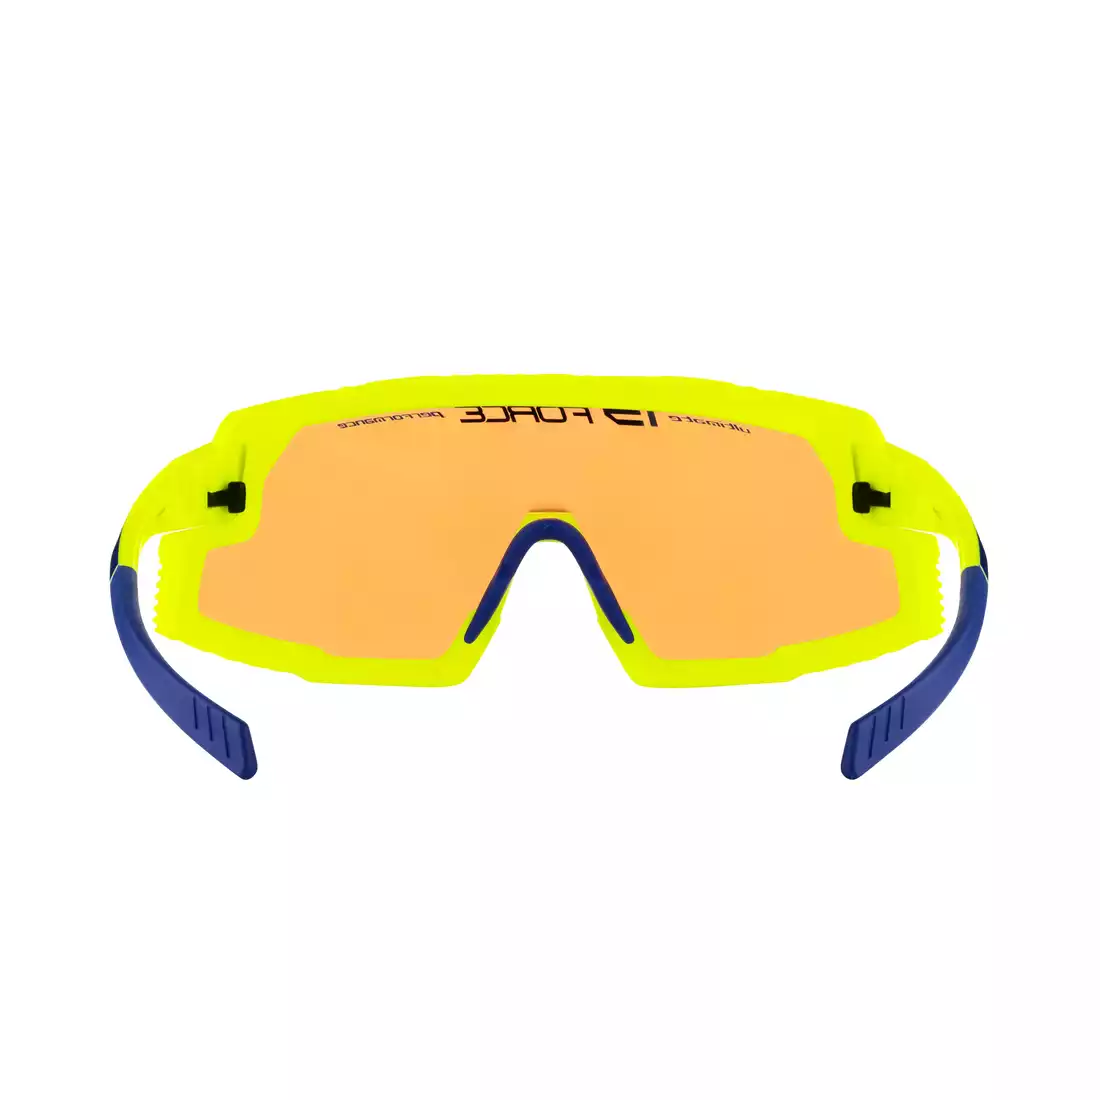 FORCE GRIP Sports glasses, contrast lenses, fluo